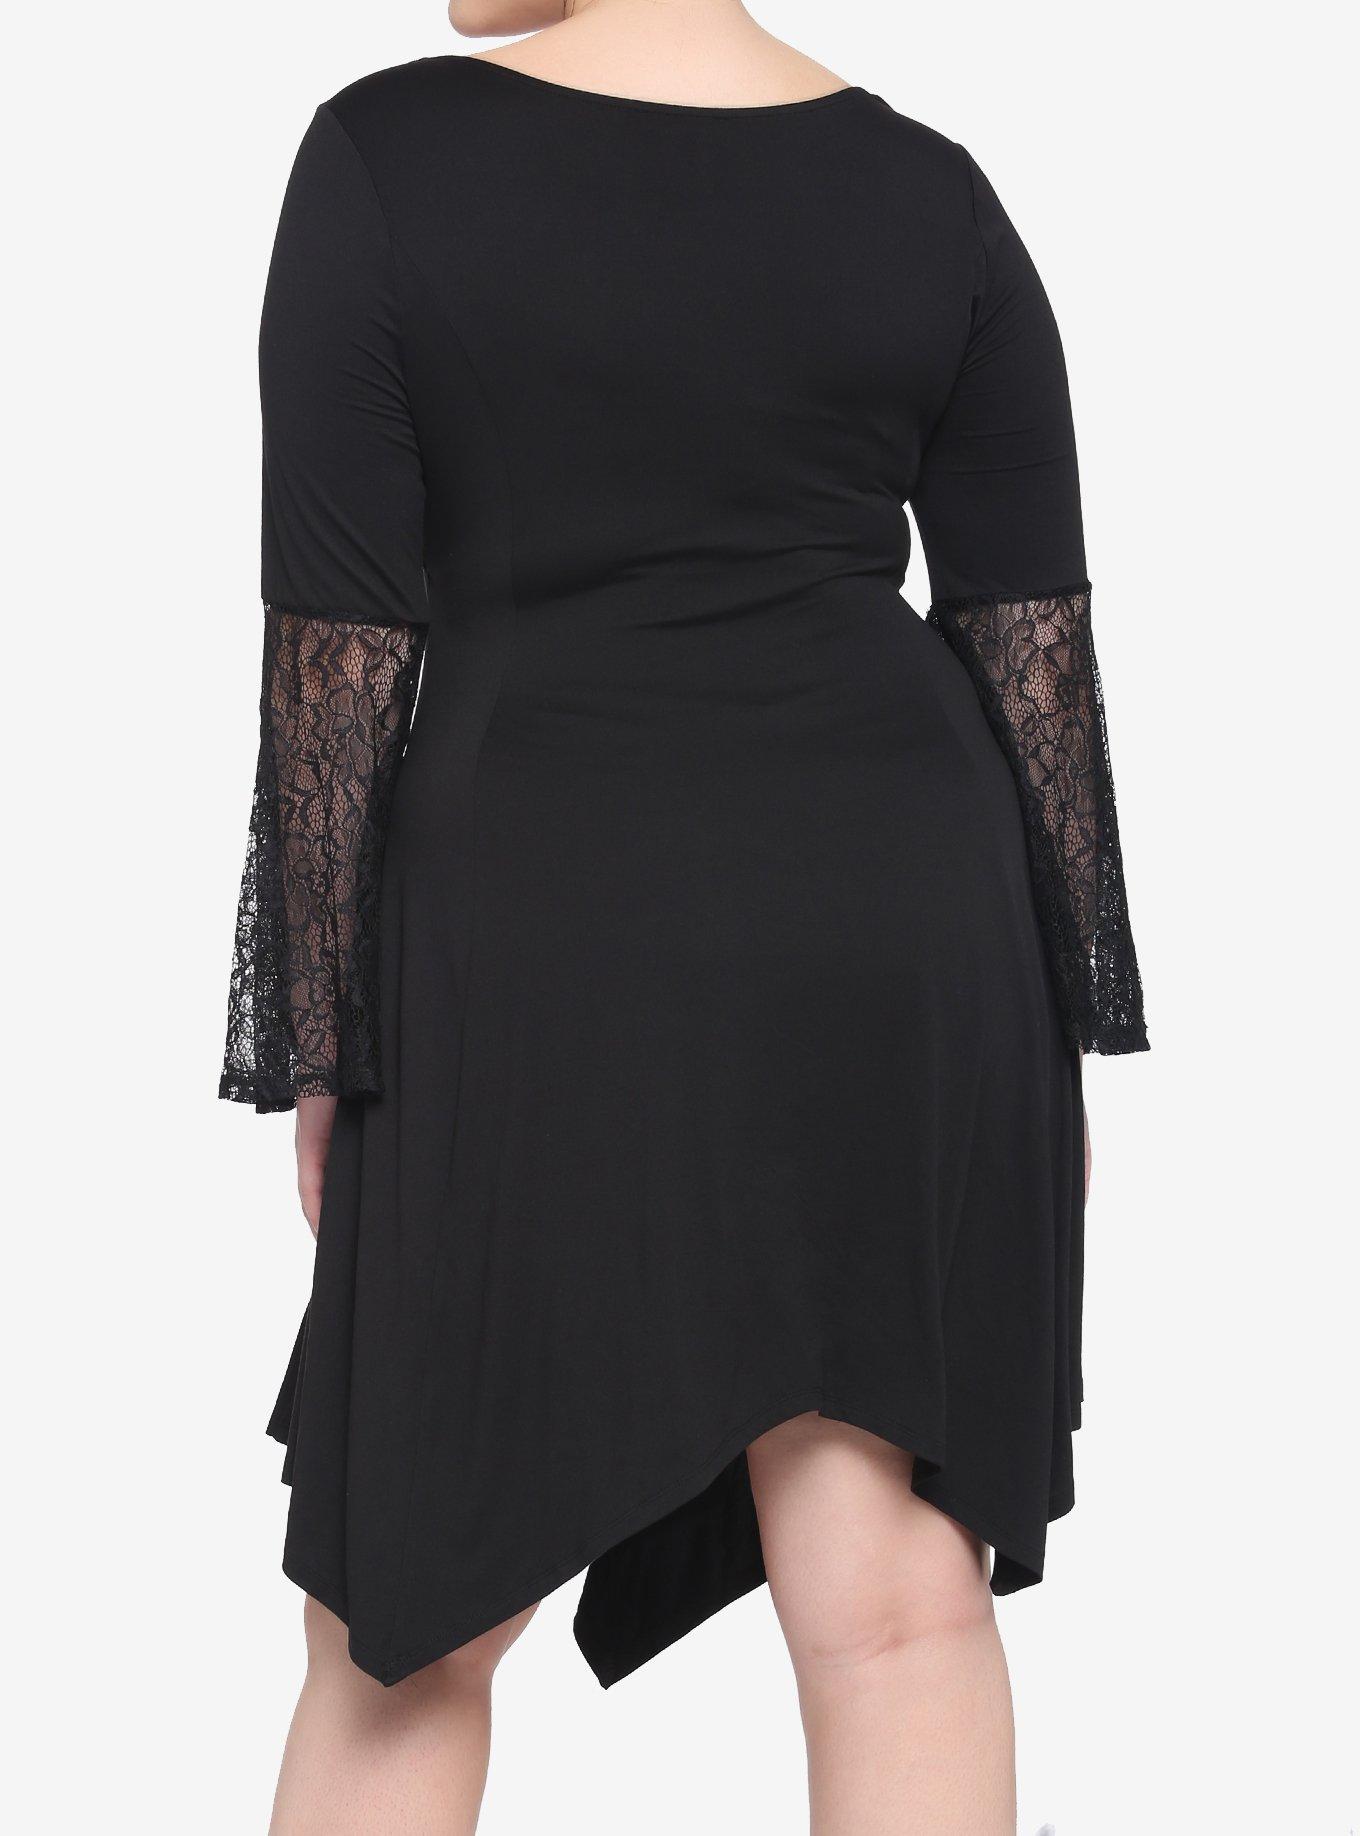 Black Empire Waist Lace Sleeve Dress Plus